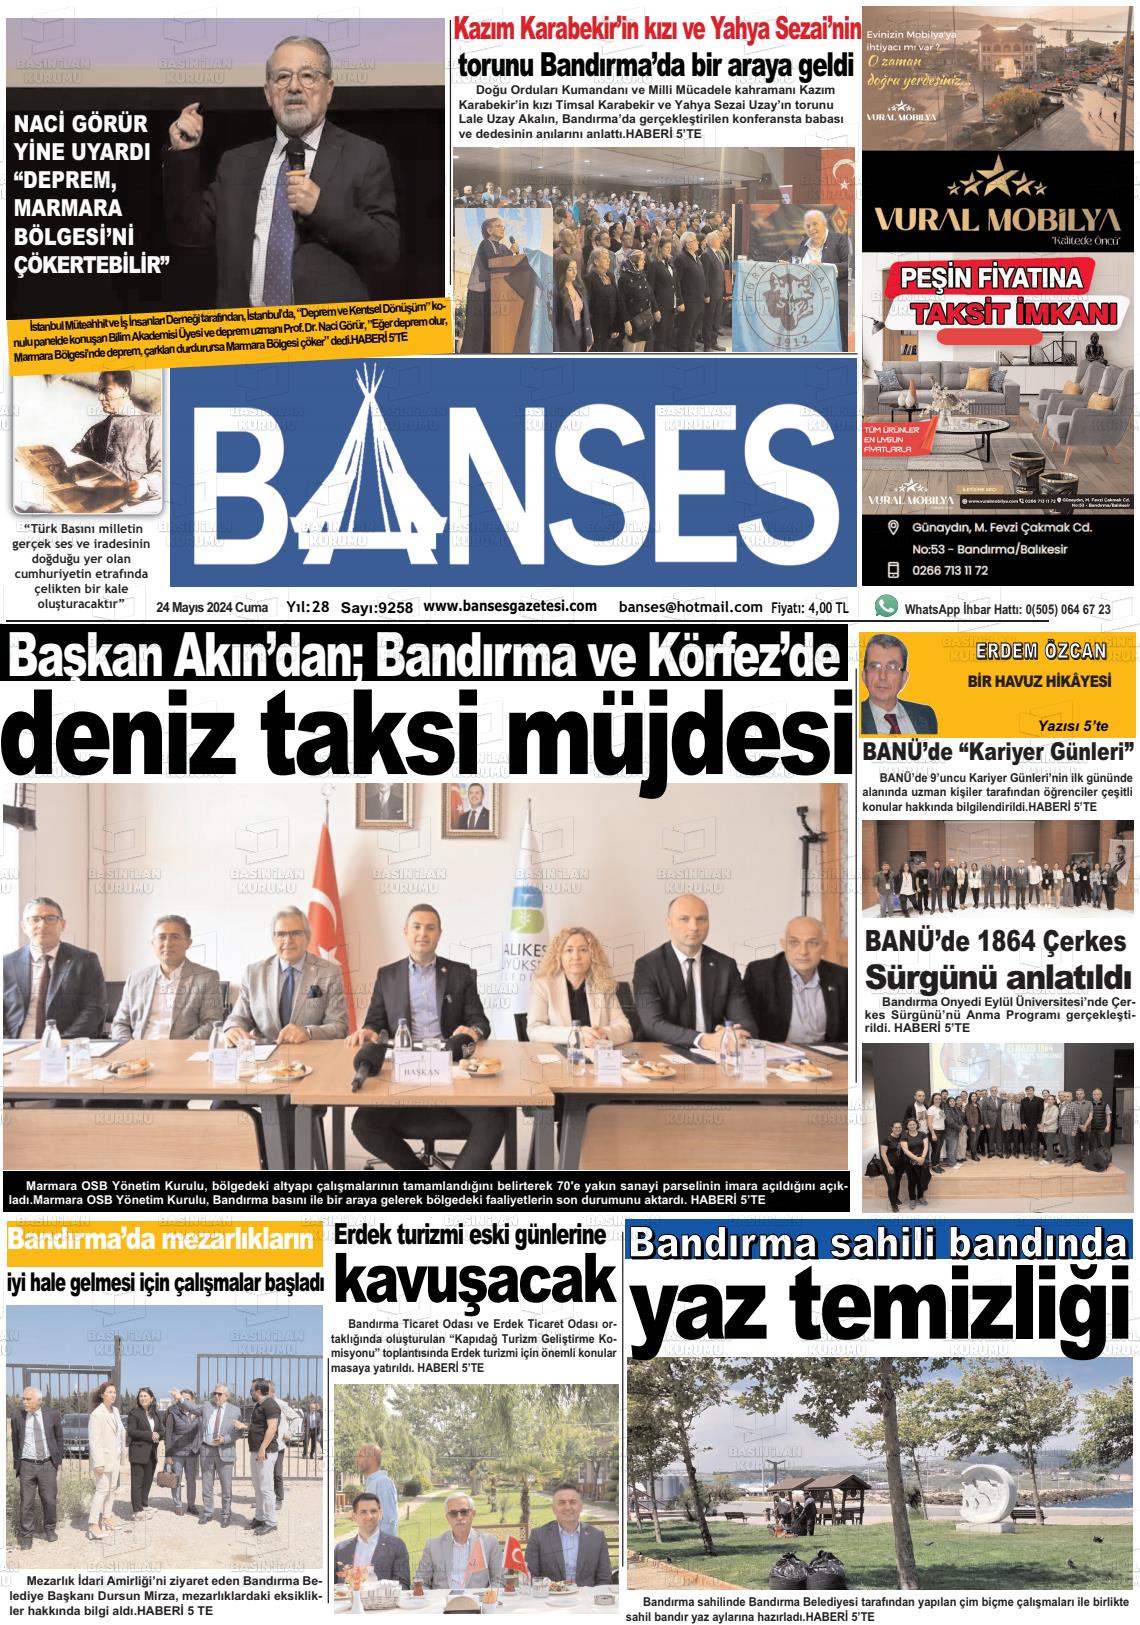 BANSES Gazetesi